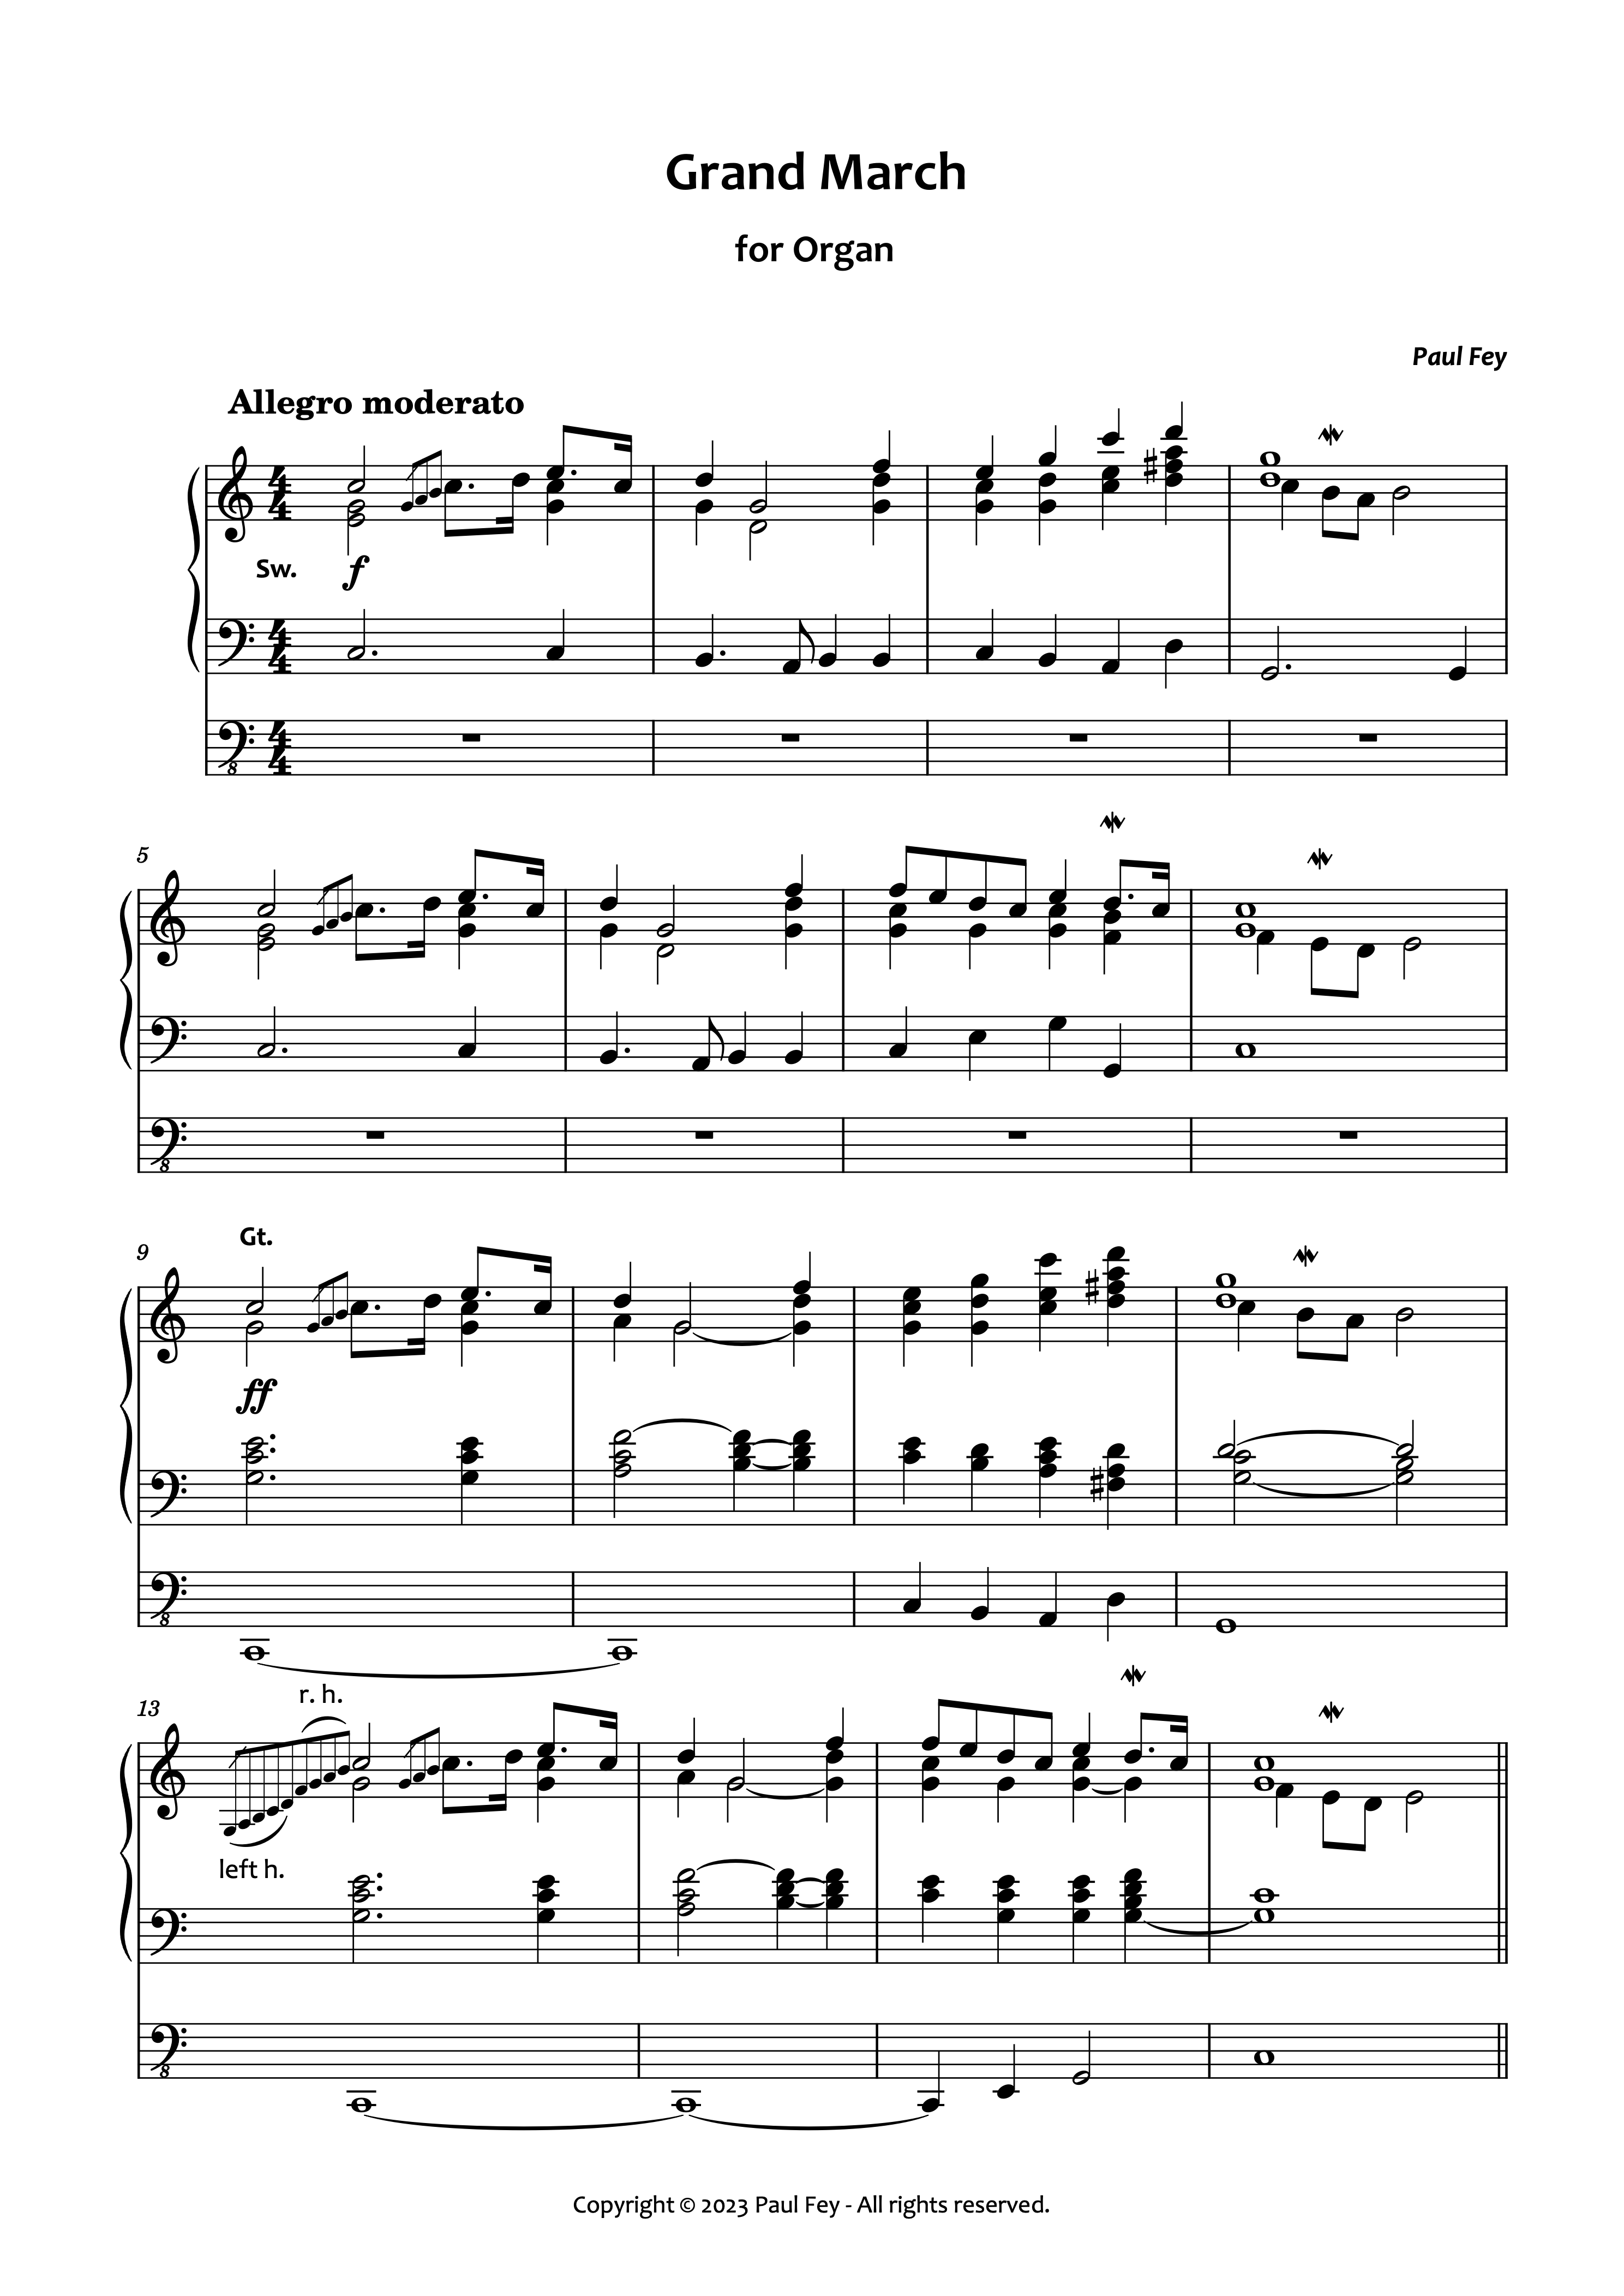 Grand March (Sheet Music) - Festive Music for Organ by Paul Fey organist 